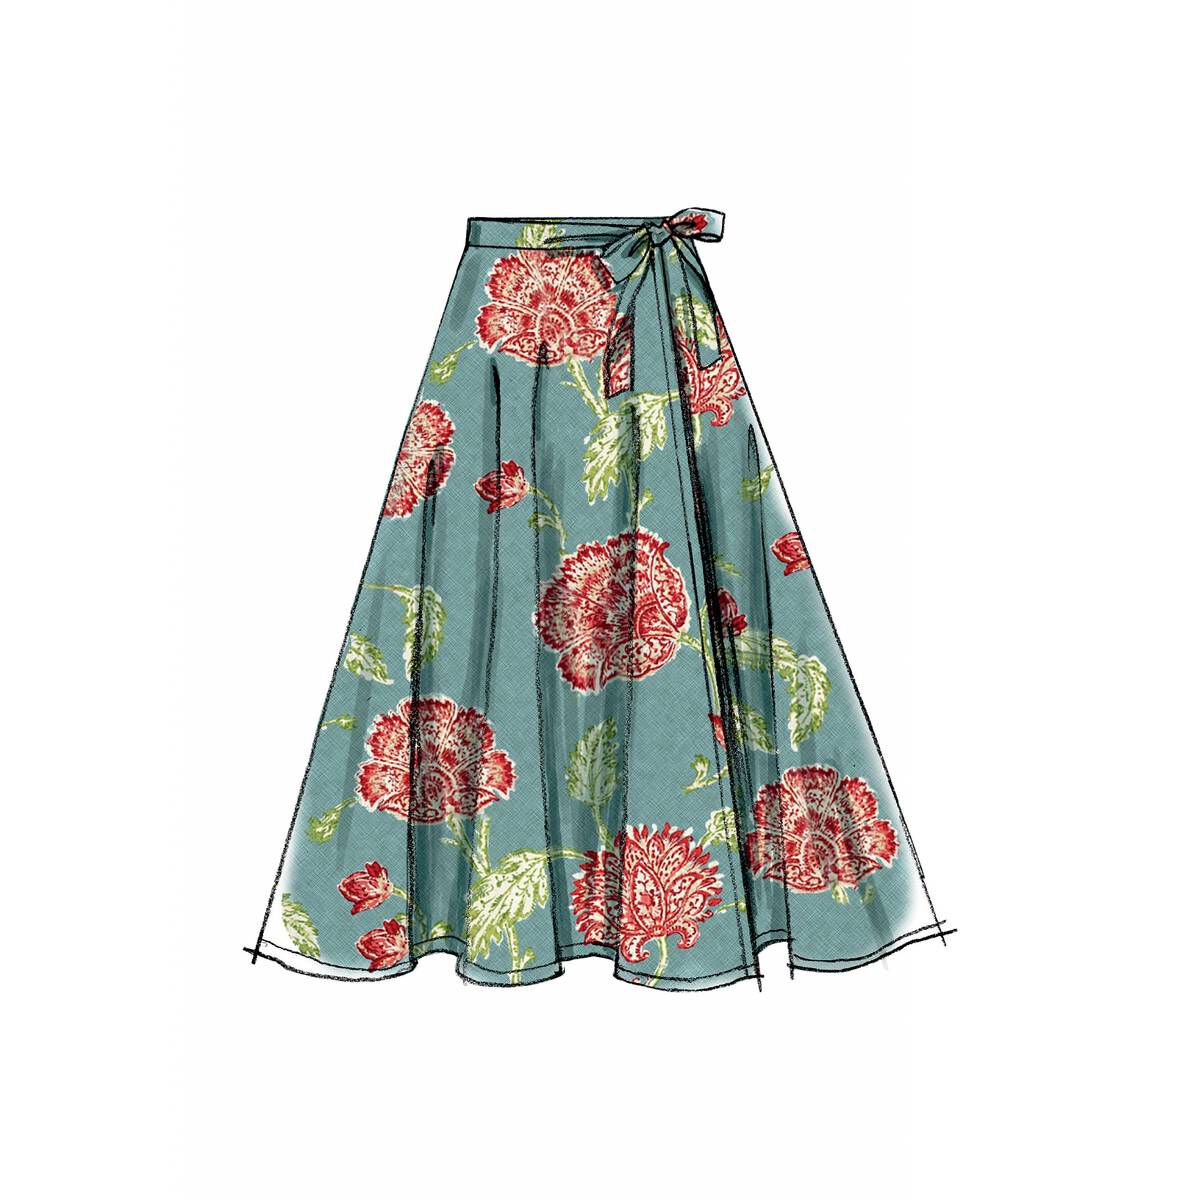 McCall’s Women’s Skirts Sewing Pattern M7129 (8-16) | Hobbycraft